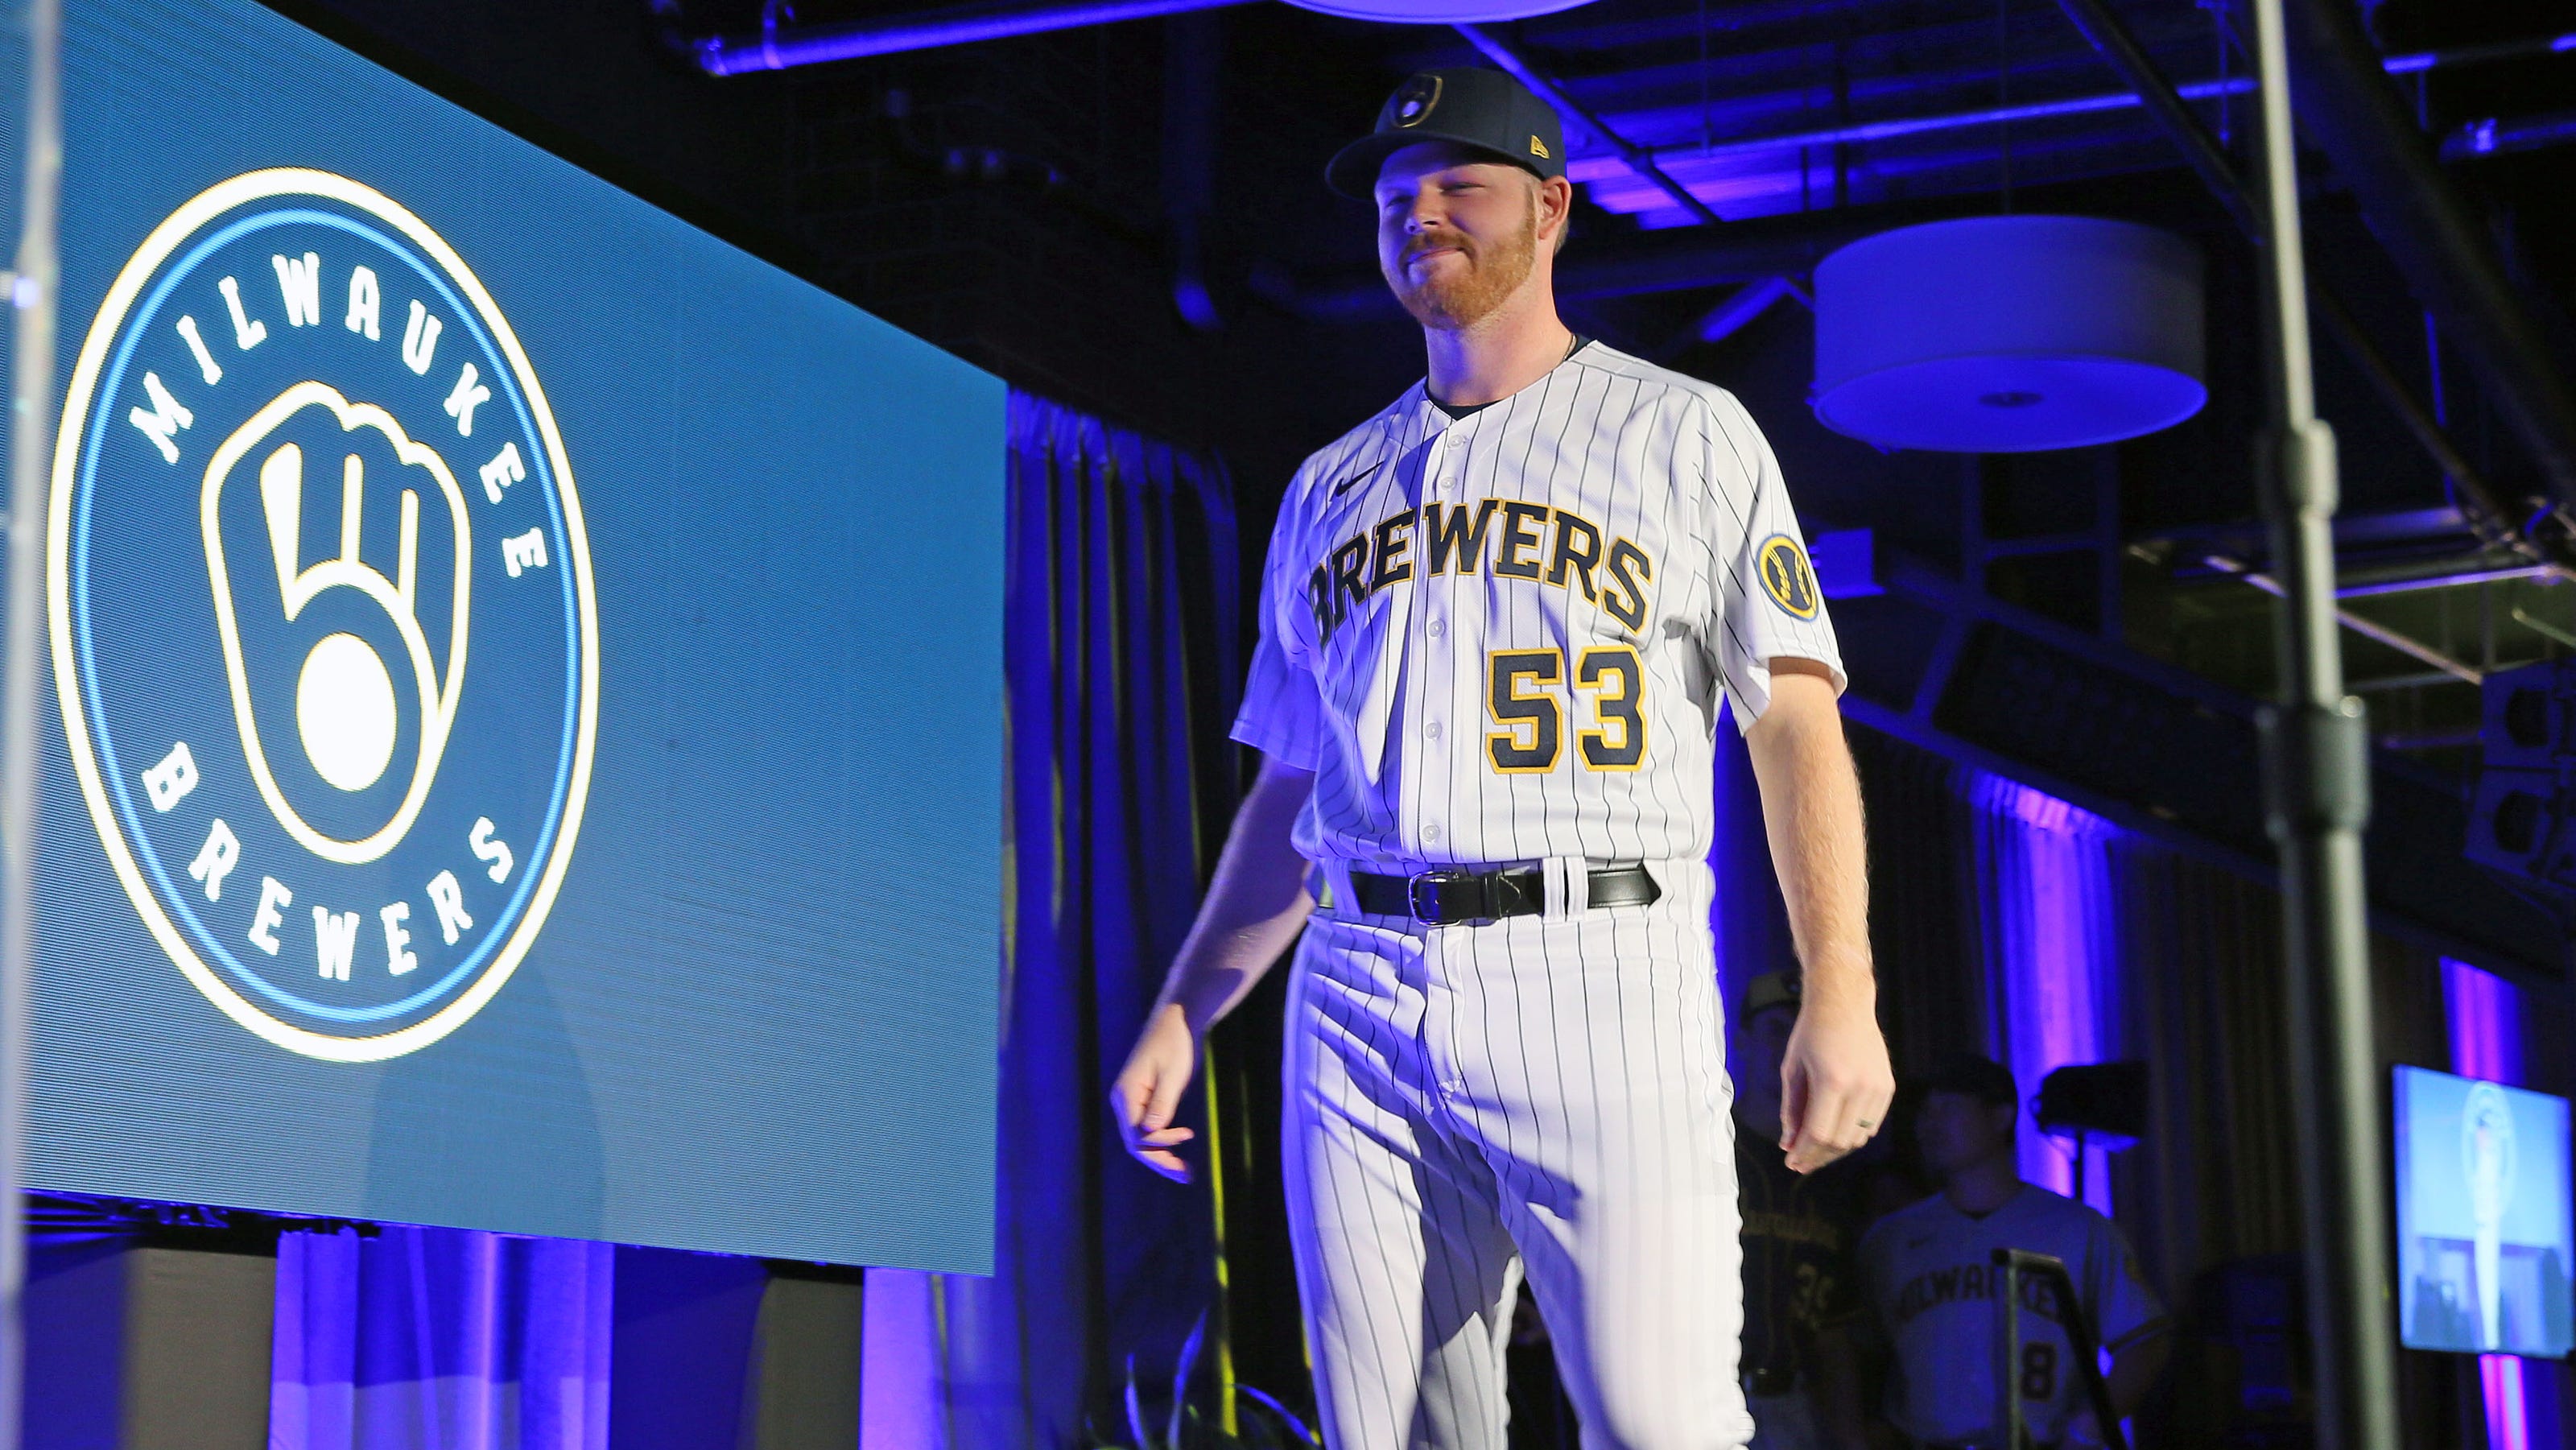 Brewers new logo, uniforms in 2020 Milwaukee returns to ballinglove